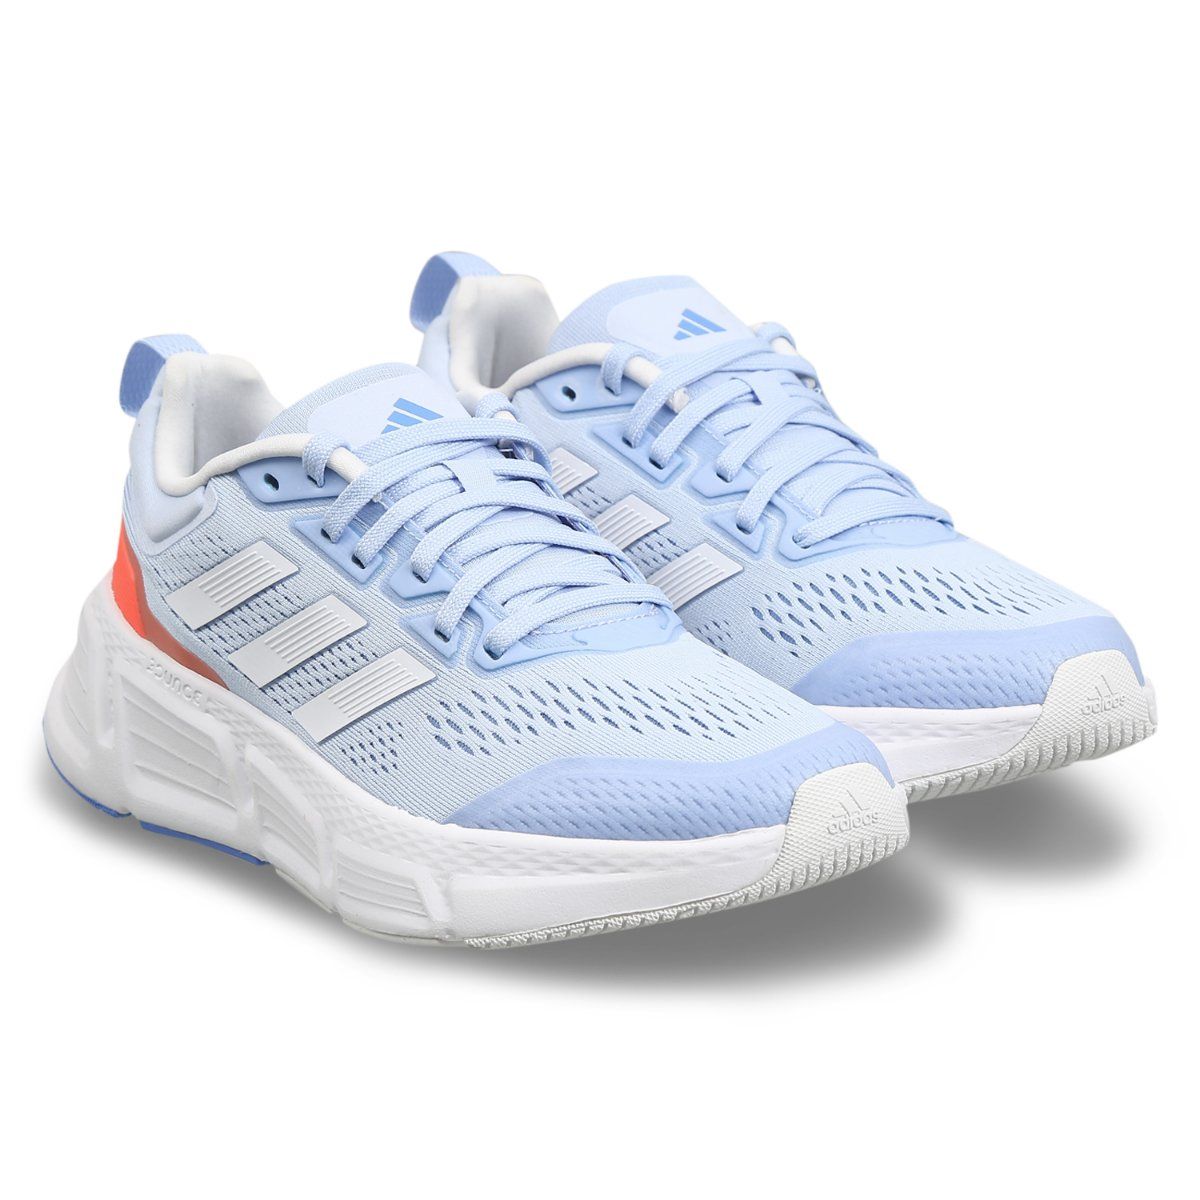 adidas adizero Ubersonic 4 LanzaT Red/Blue Men's Shoes | Tennis Warehouse